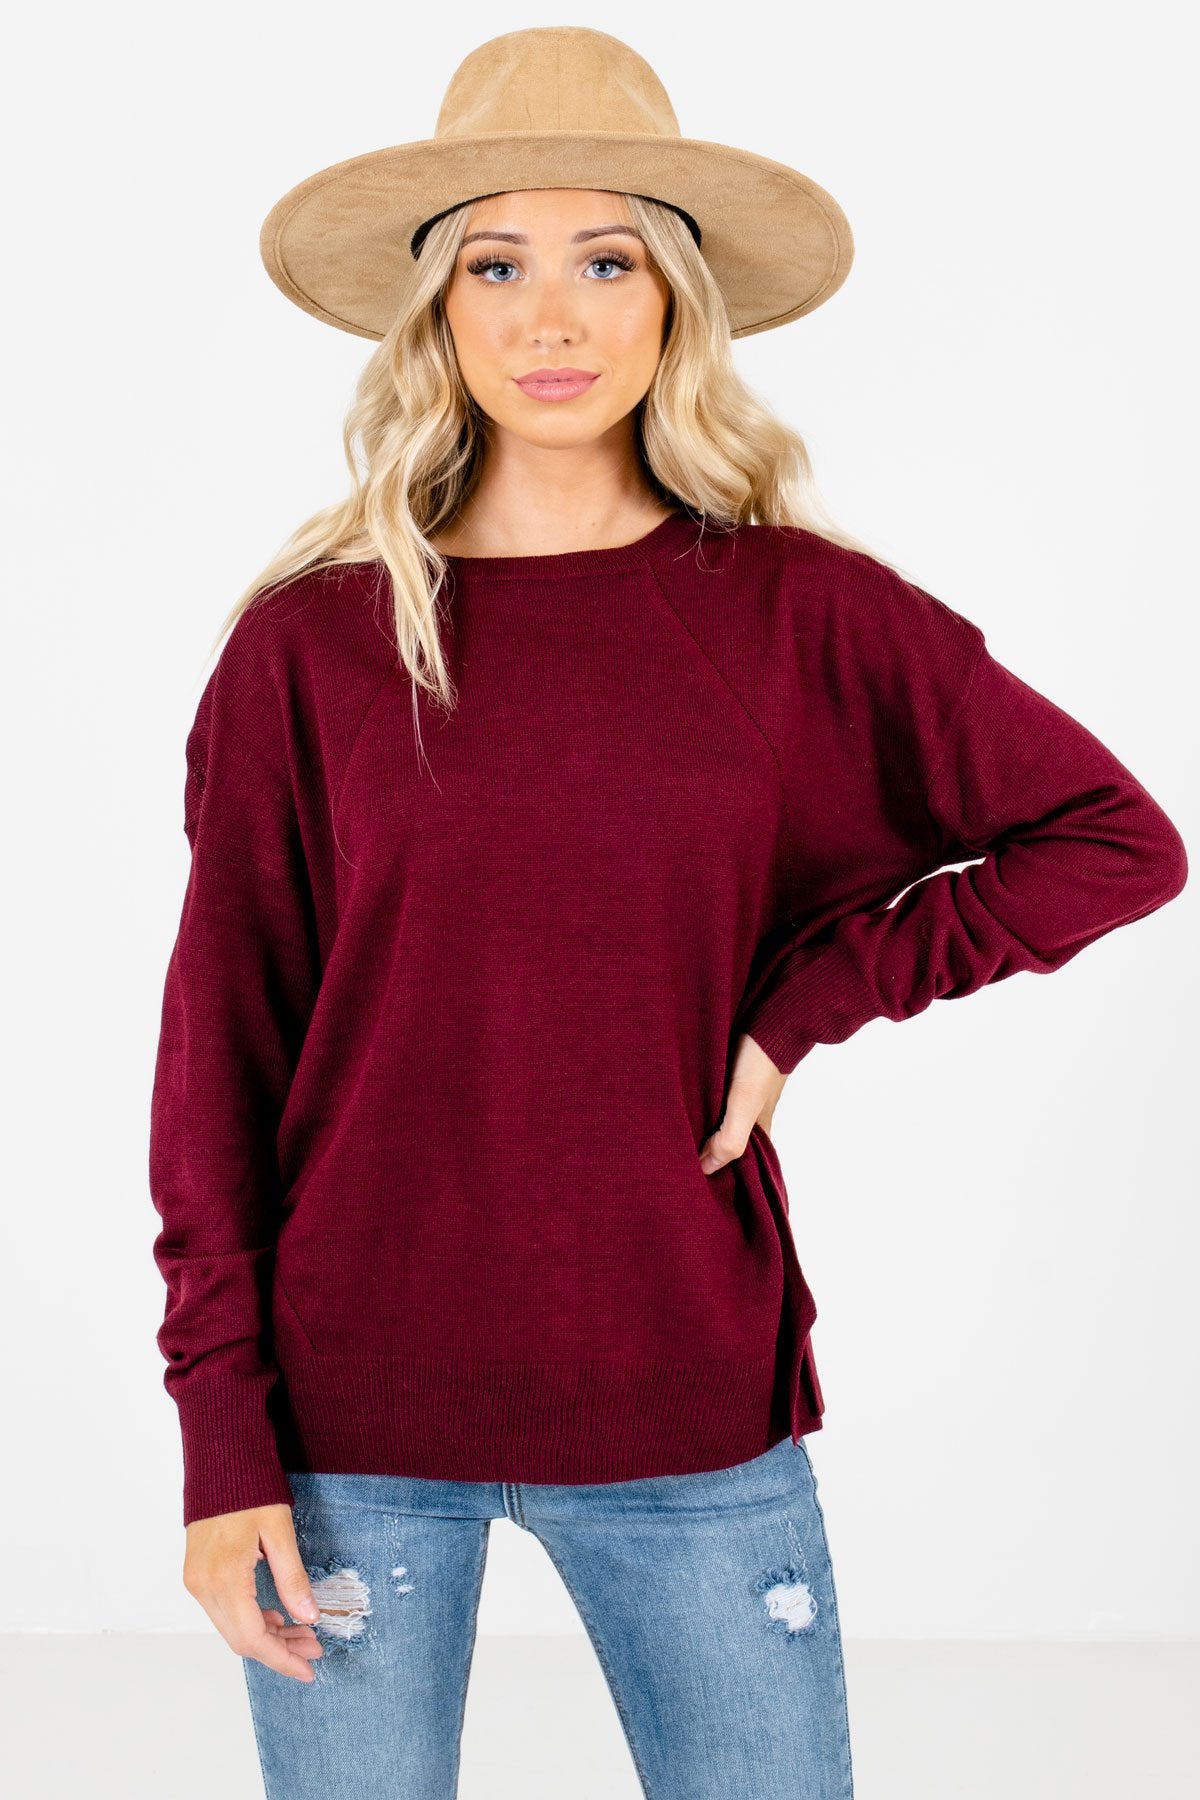 Burgundy Decorative Button Boutique Sweaters for Women